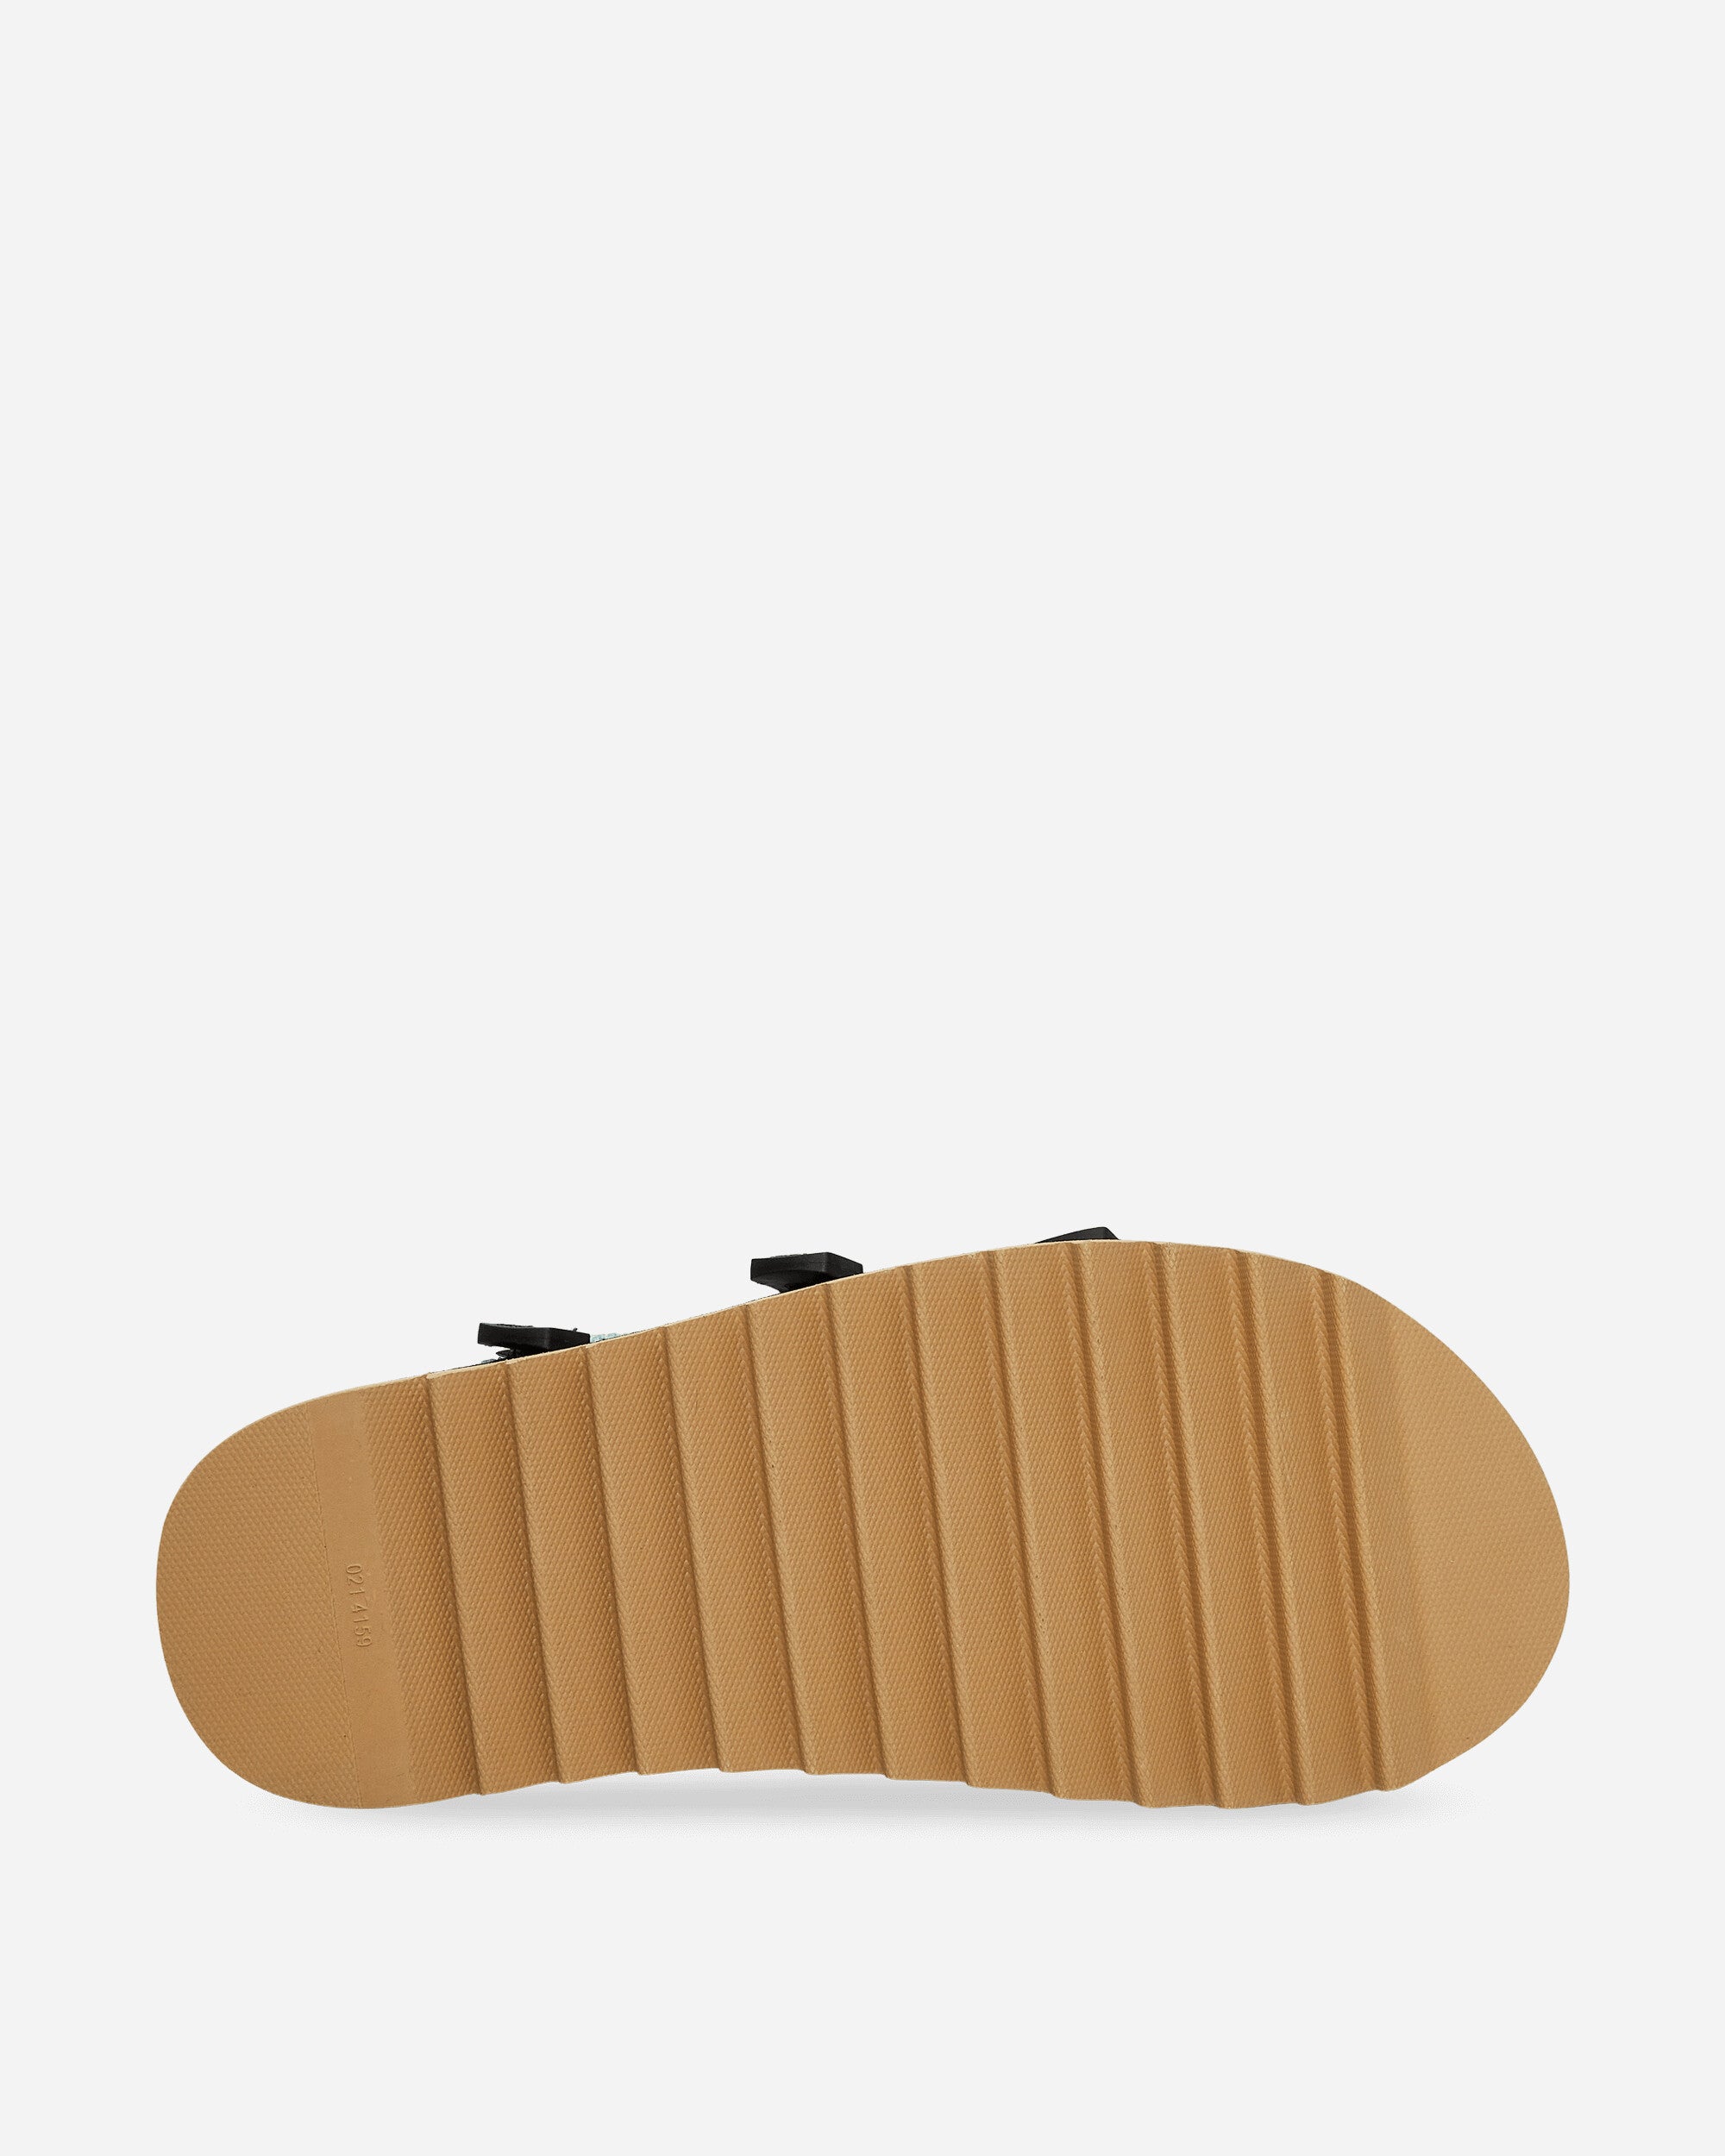 Suicoke Zip-Ab2 Black Seafoam Sandals and Slides Sandals and Mules OG229ab2 BLSF